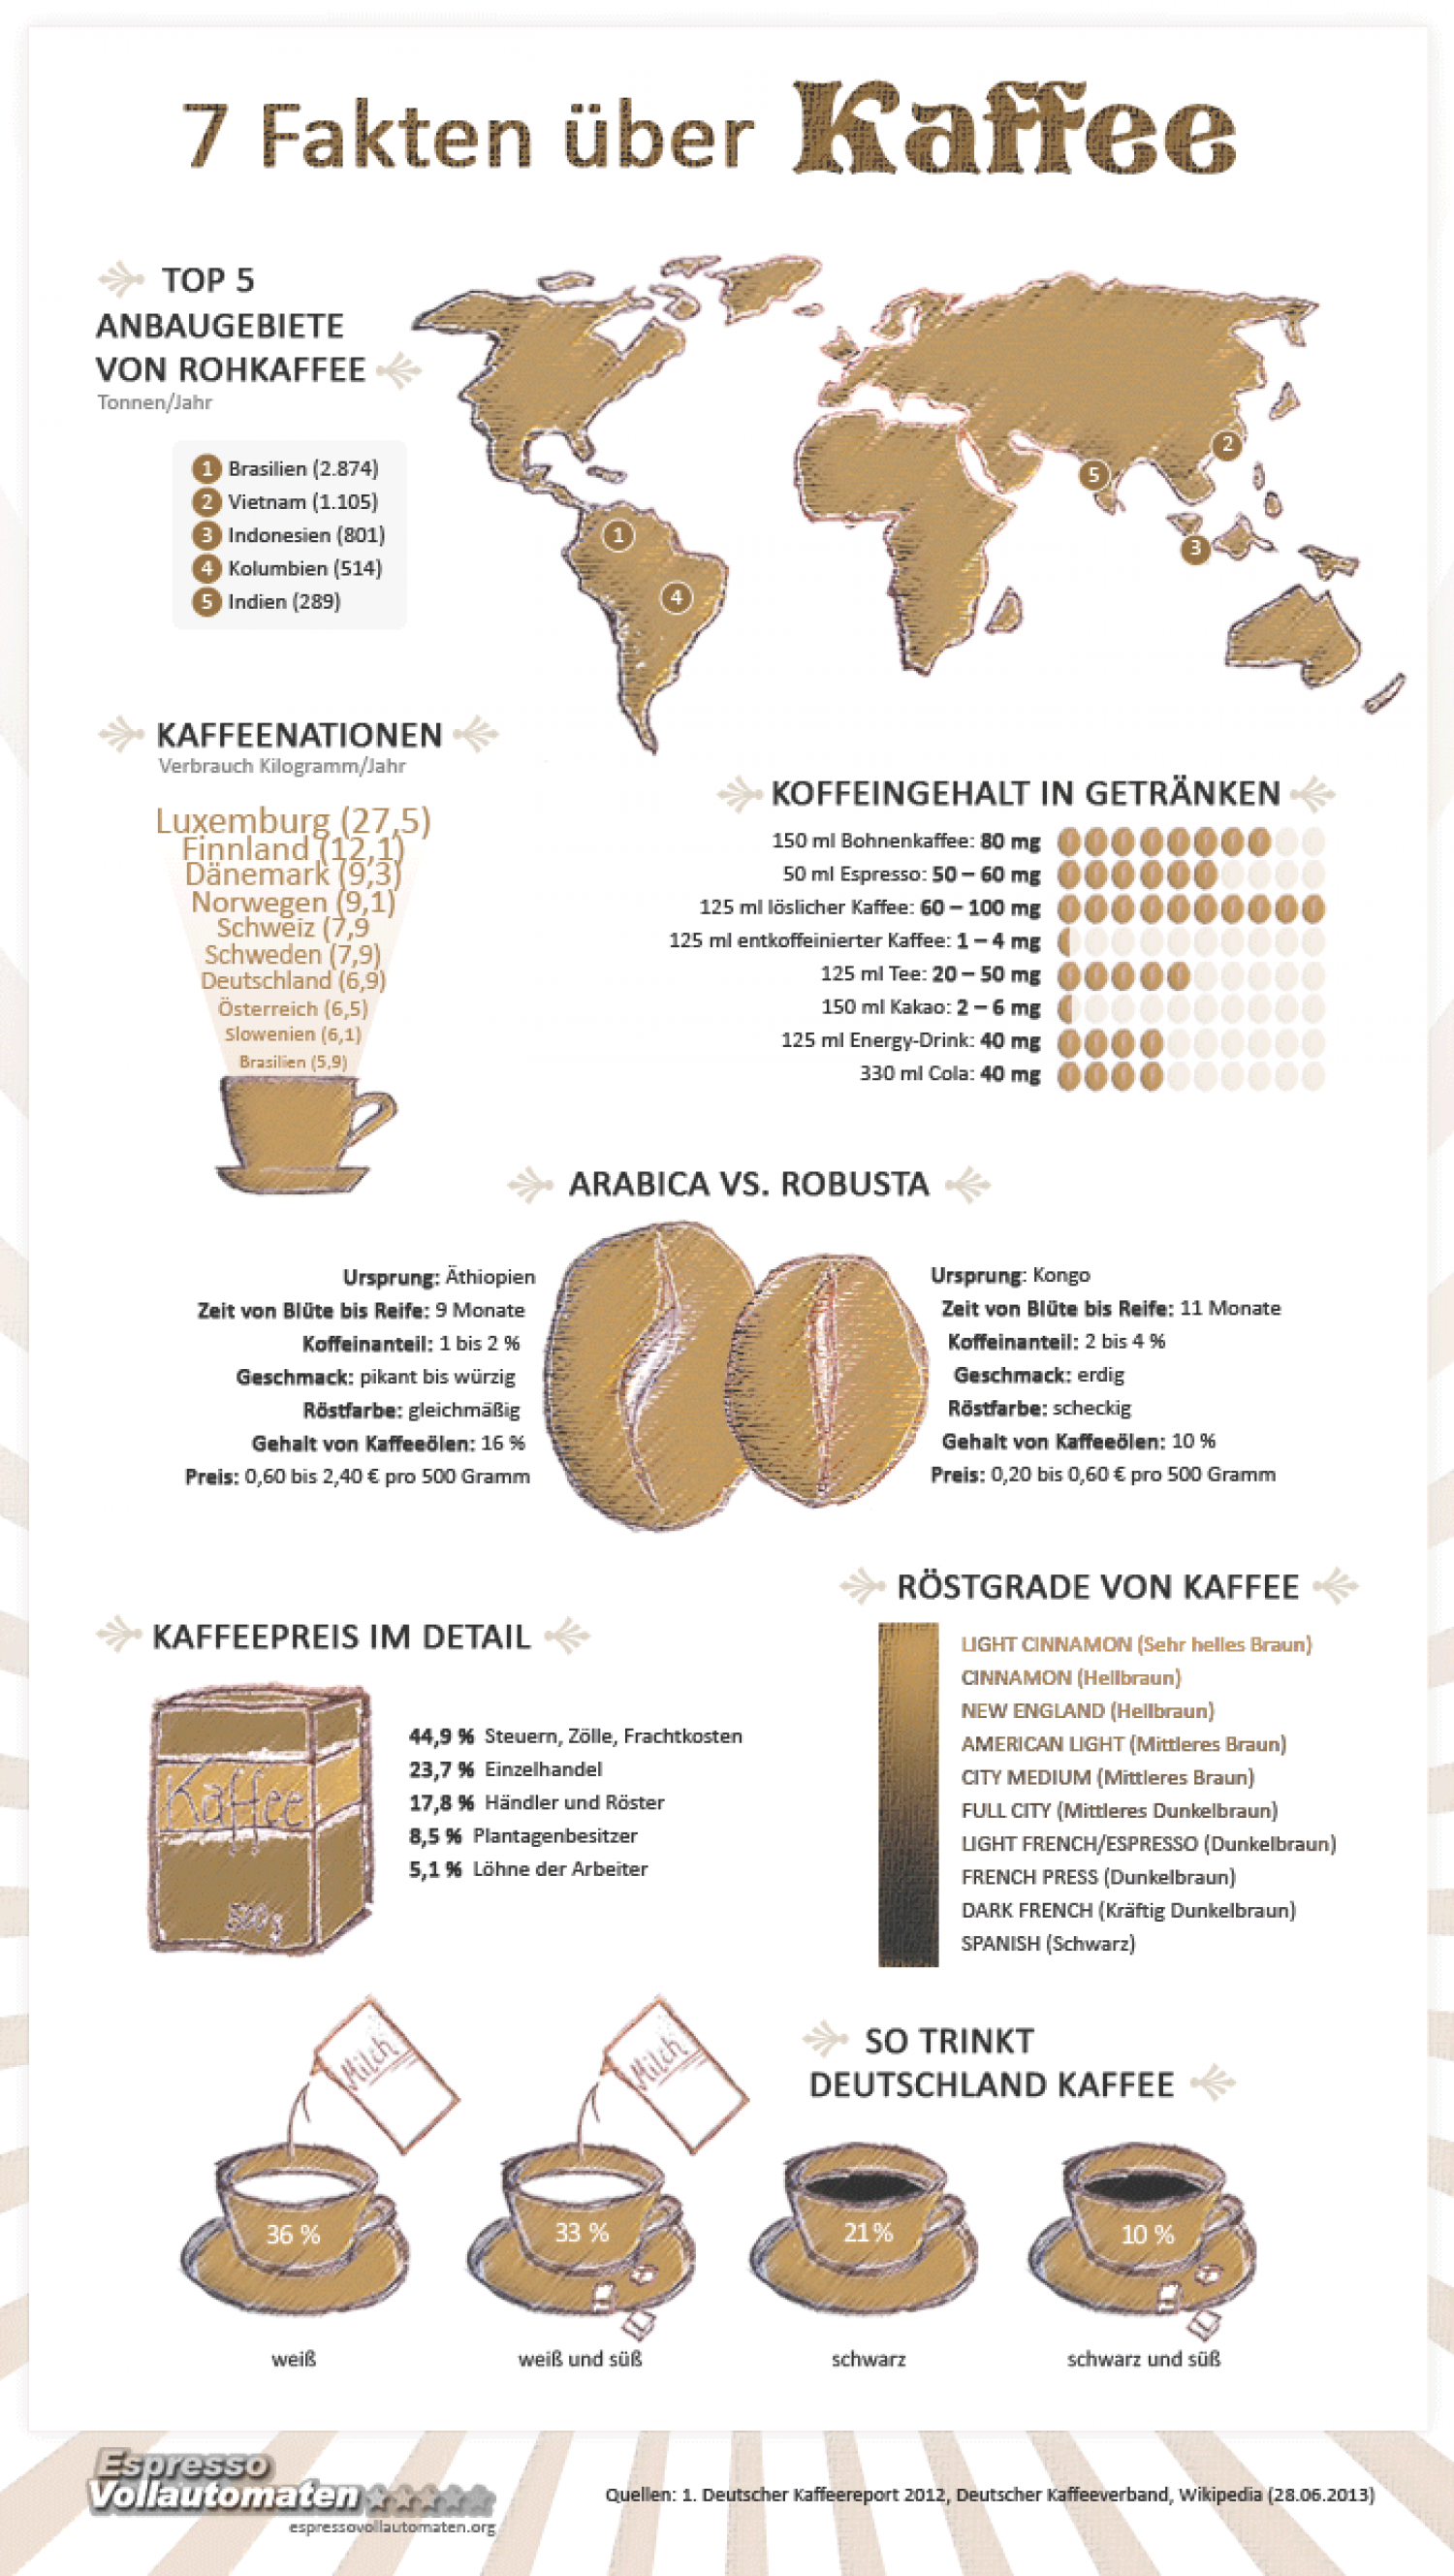 7 Fakten über Kaffee (Infografik) Infographic